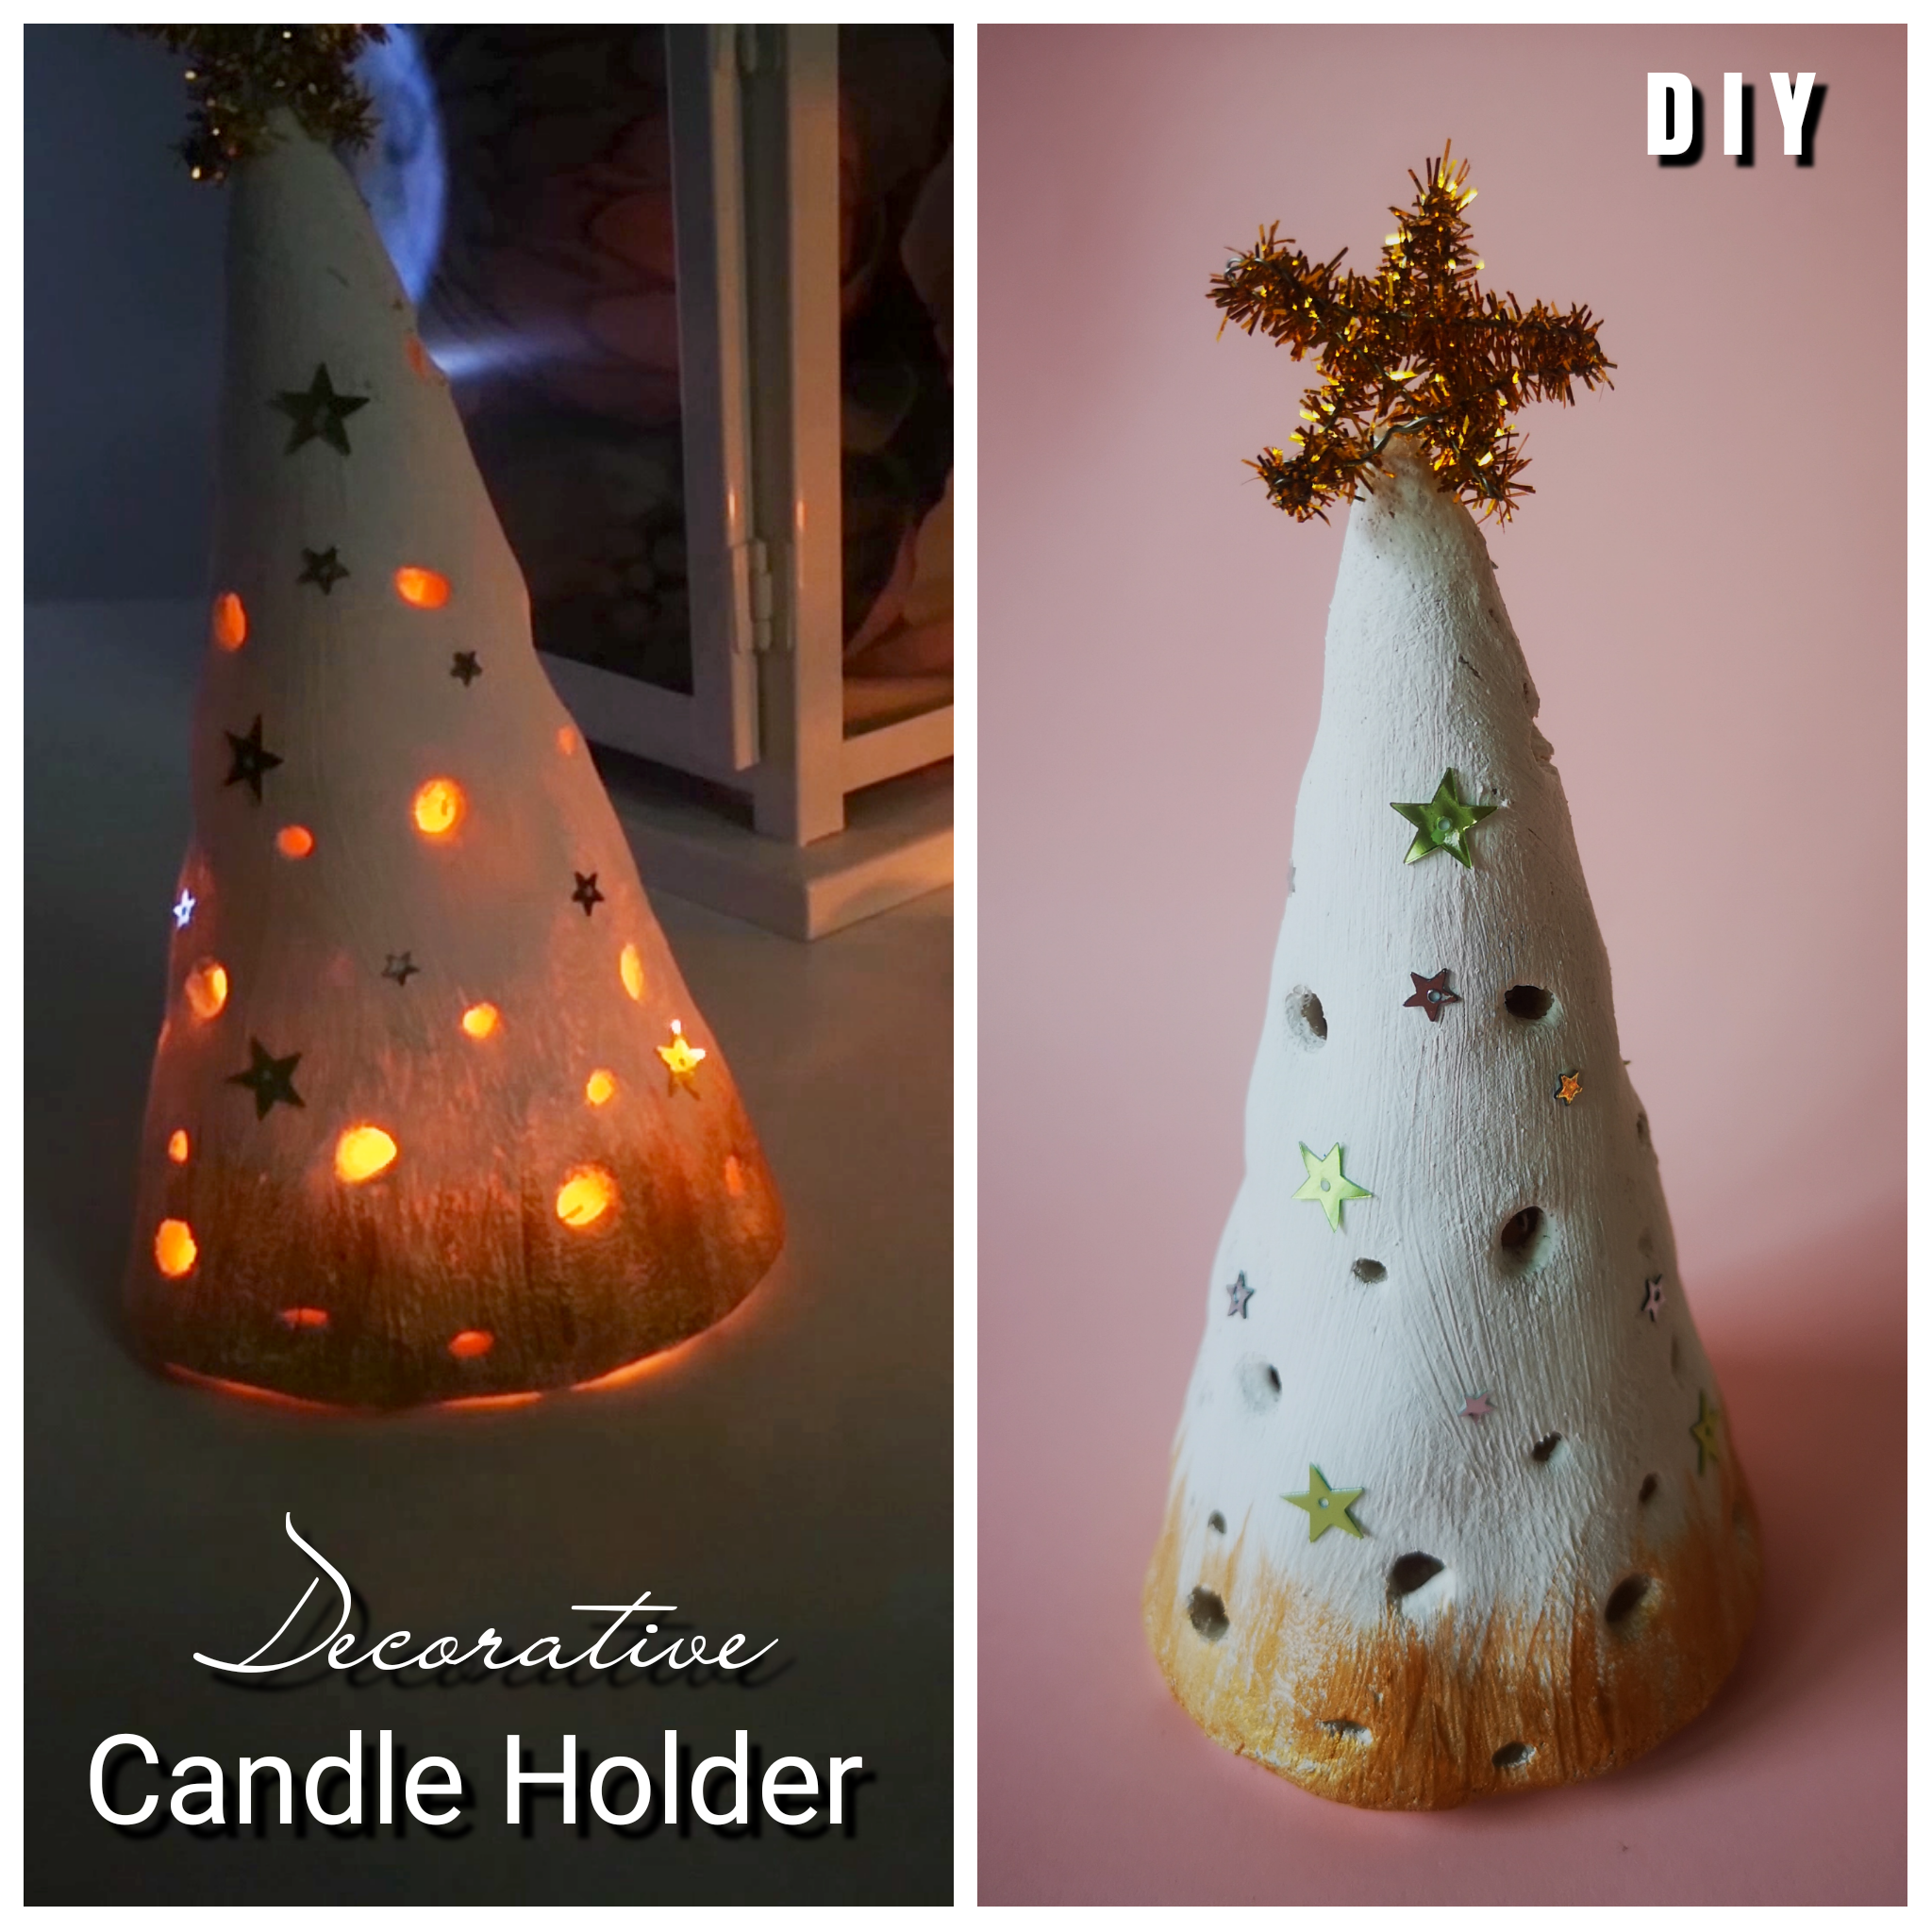 DIY Decorative Candle Holder with Salt Dough - DIY Decorative Candle Holder with Salt Dough -   18 diy Candles holders ideas